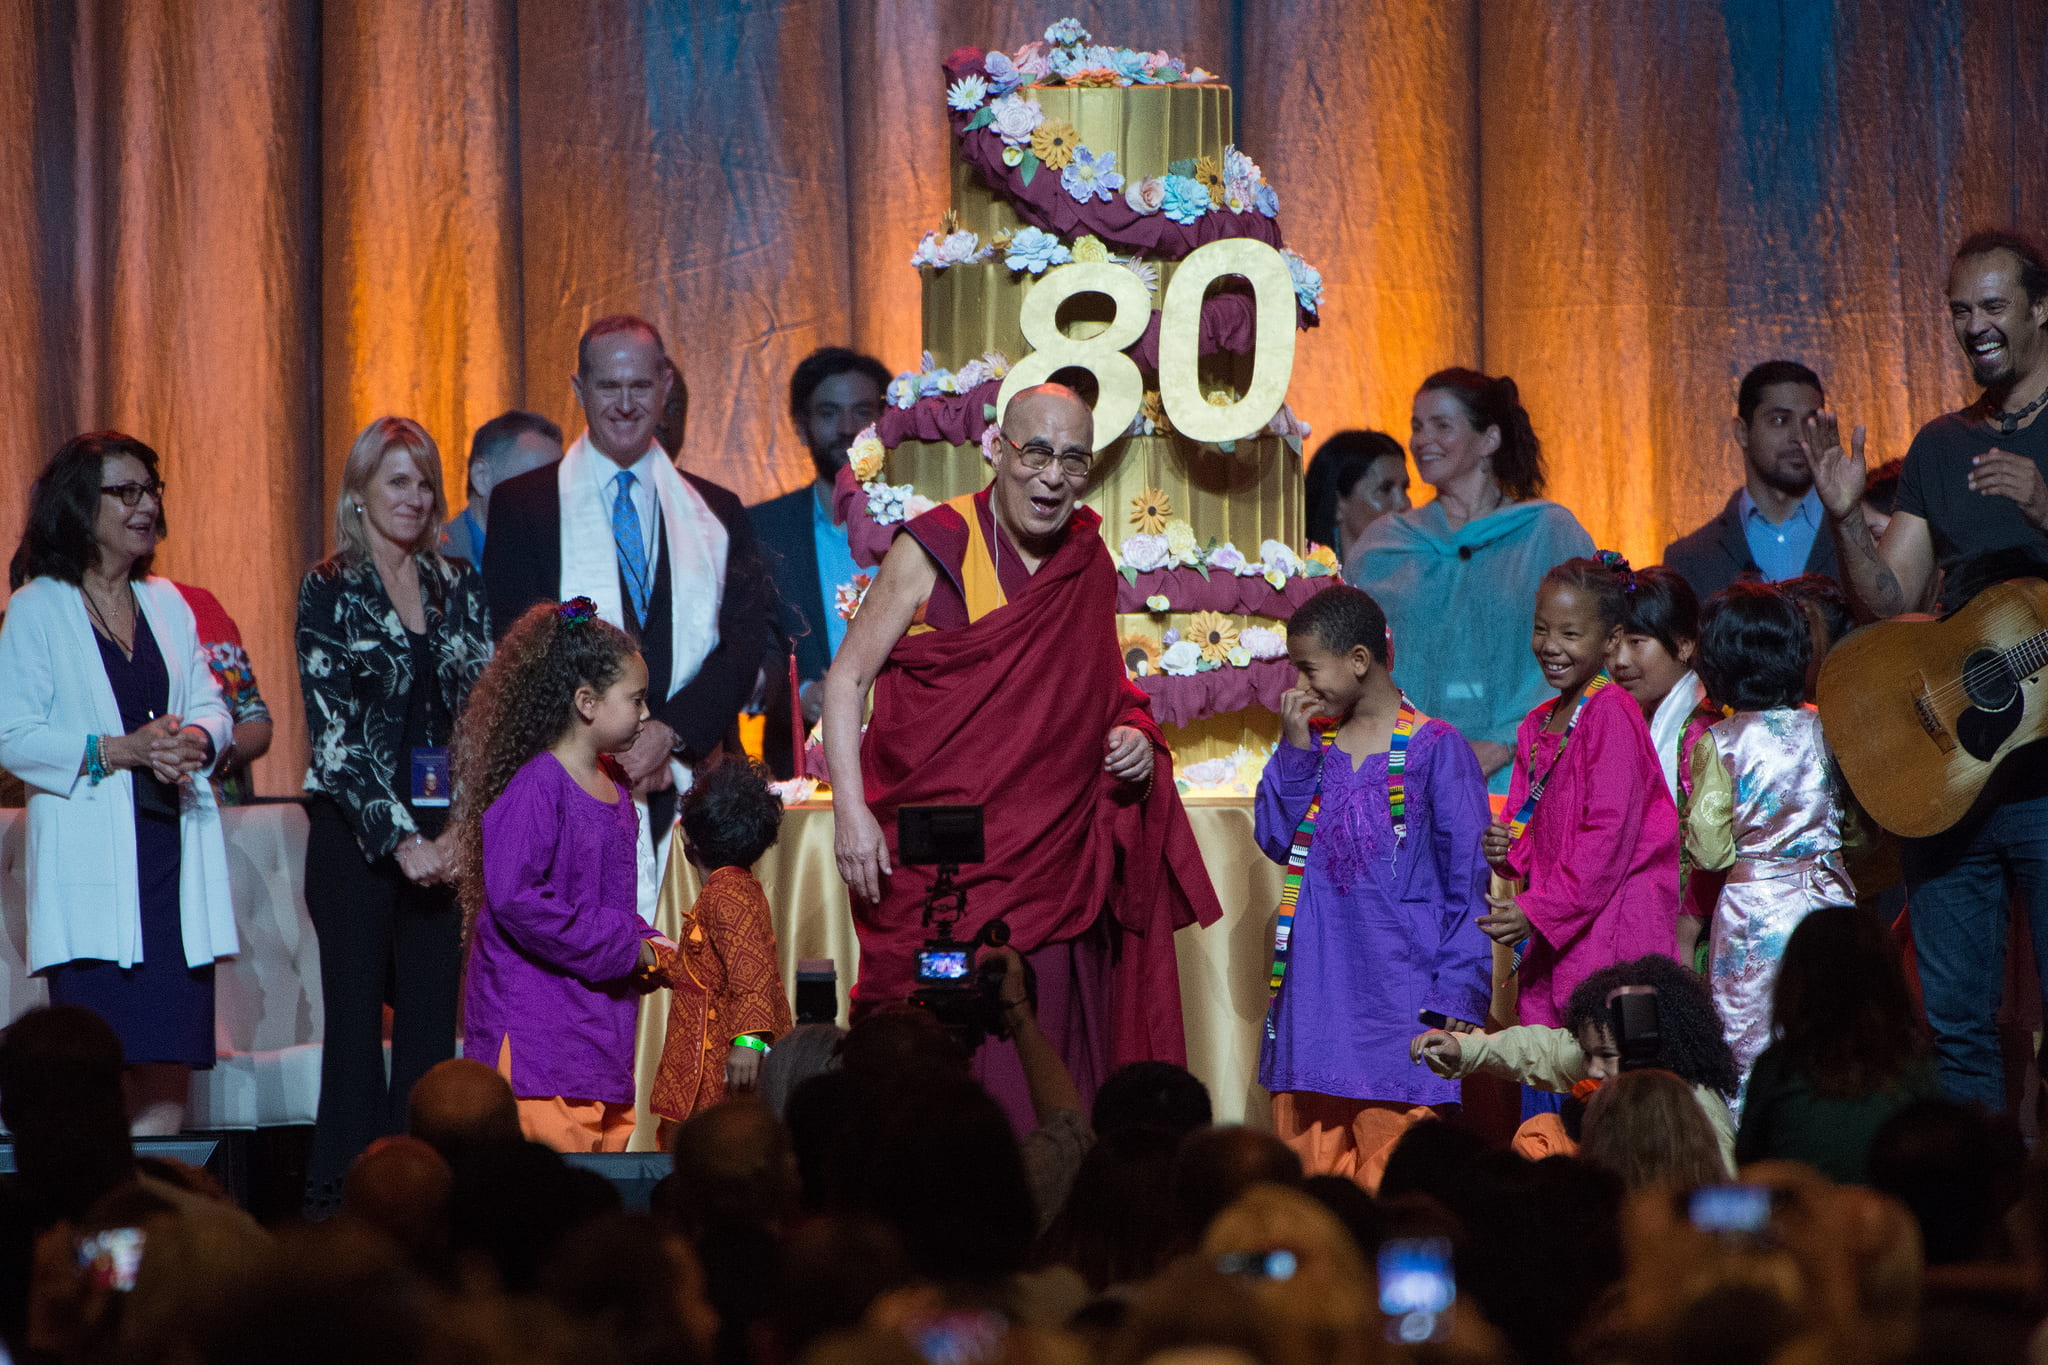 The Dalai Lama celebrating his 80th birthday